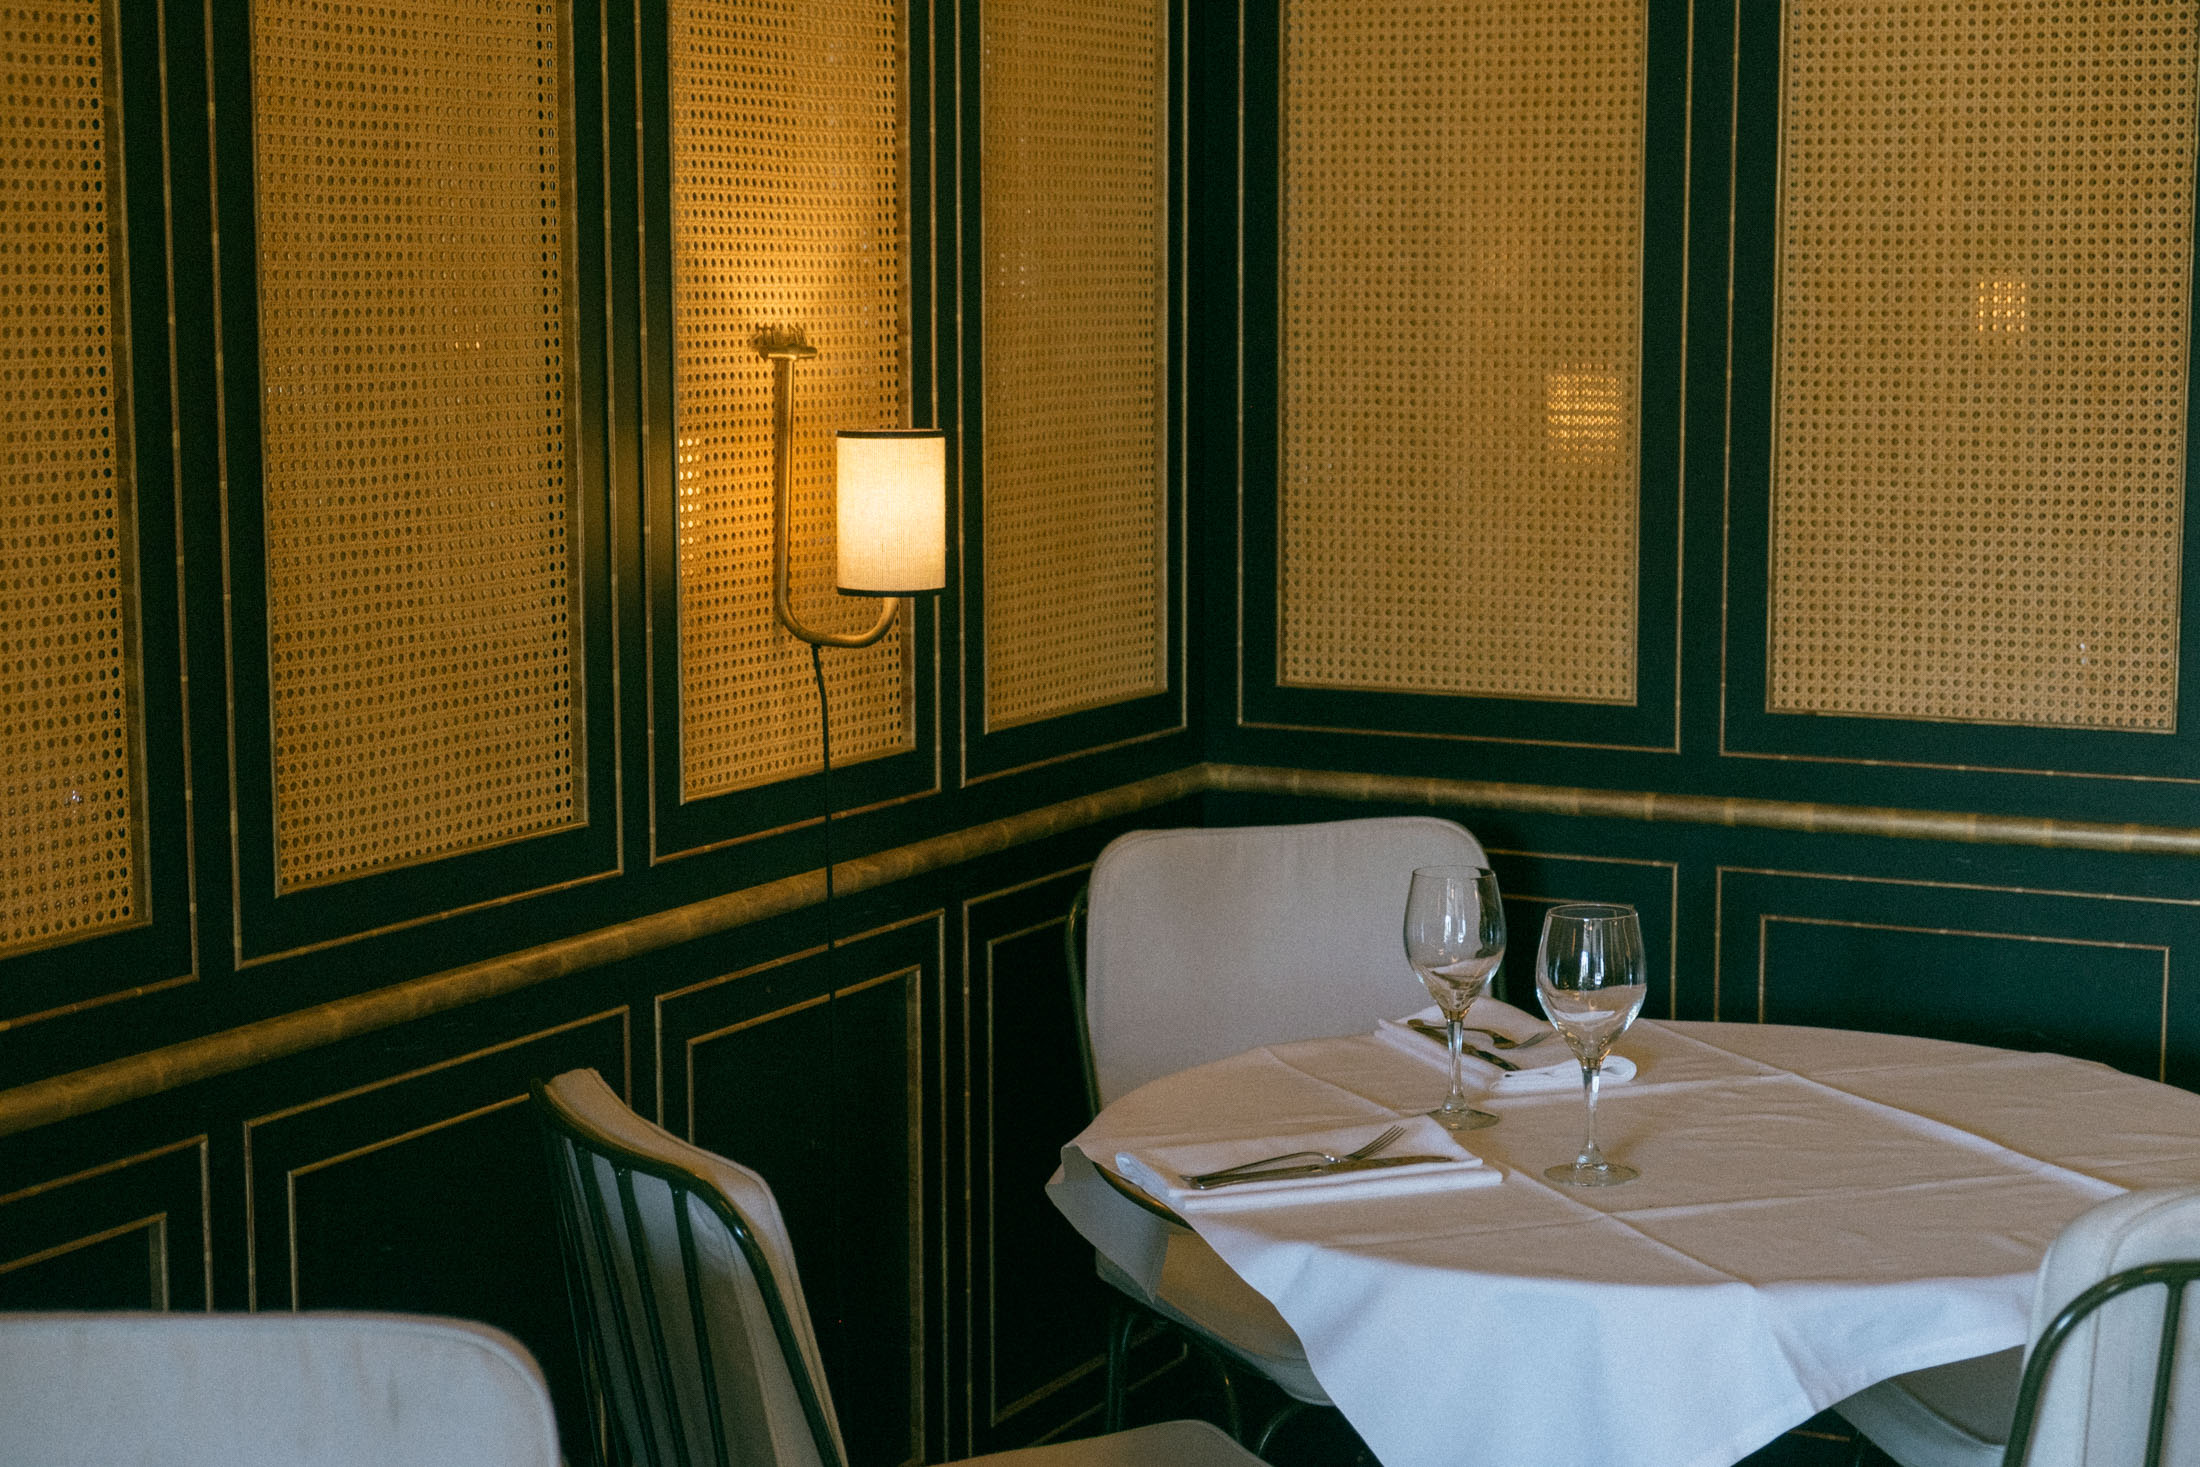 Decor at LouLou Restaurant in Paris